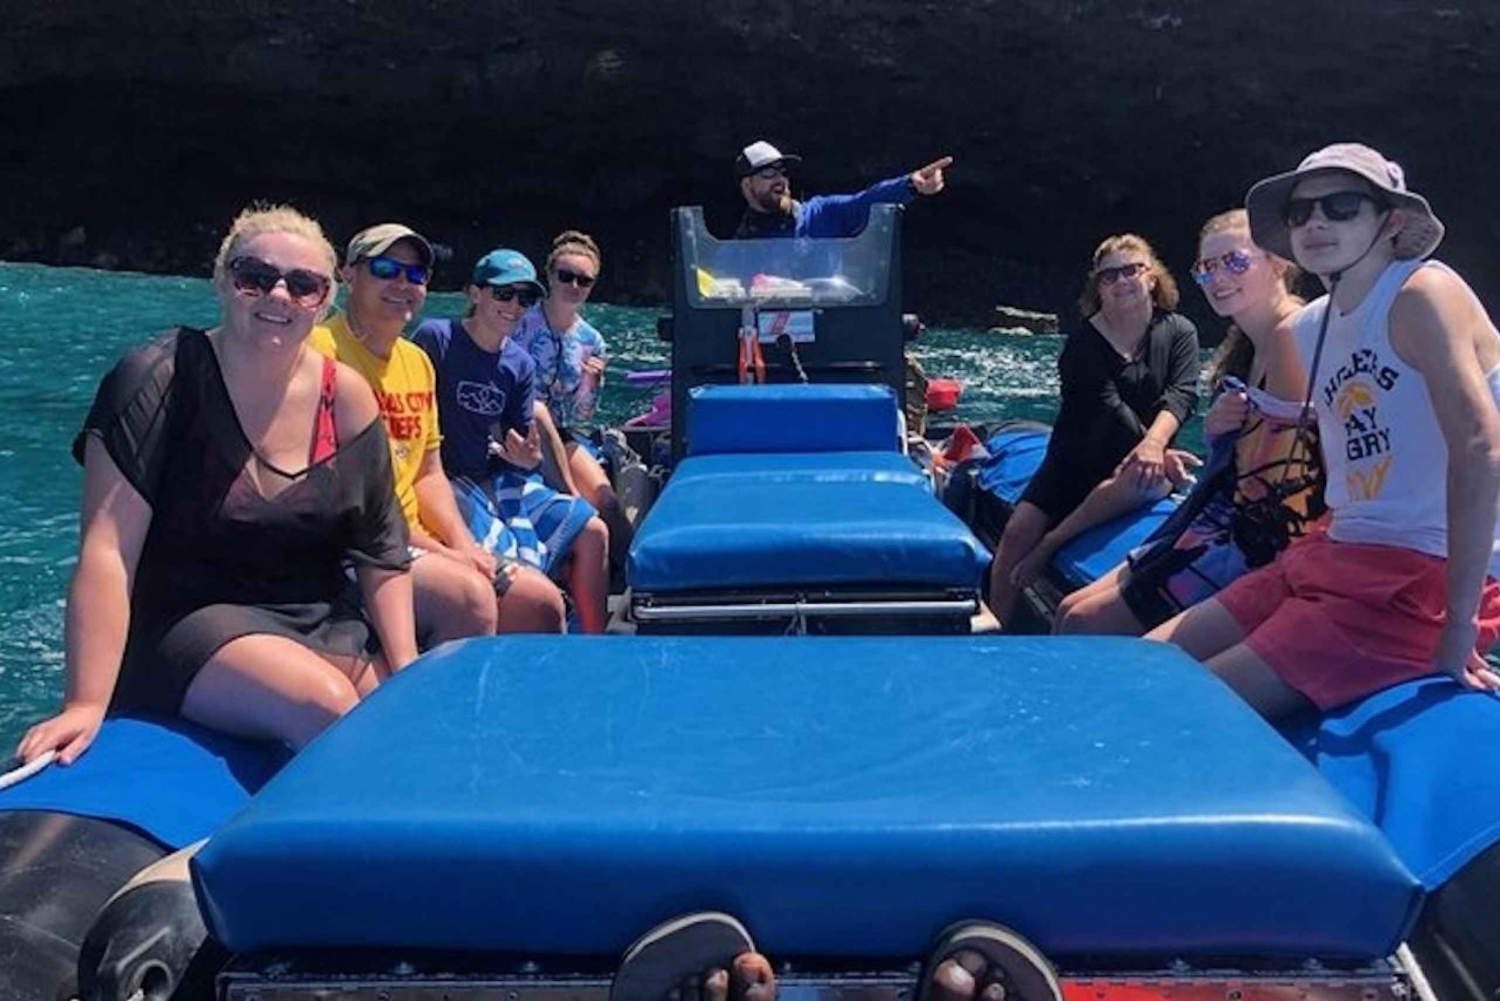 Hawai'i: Privétour snorkelen met lunch en drankjes